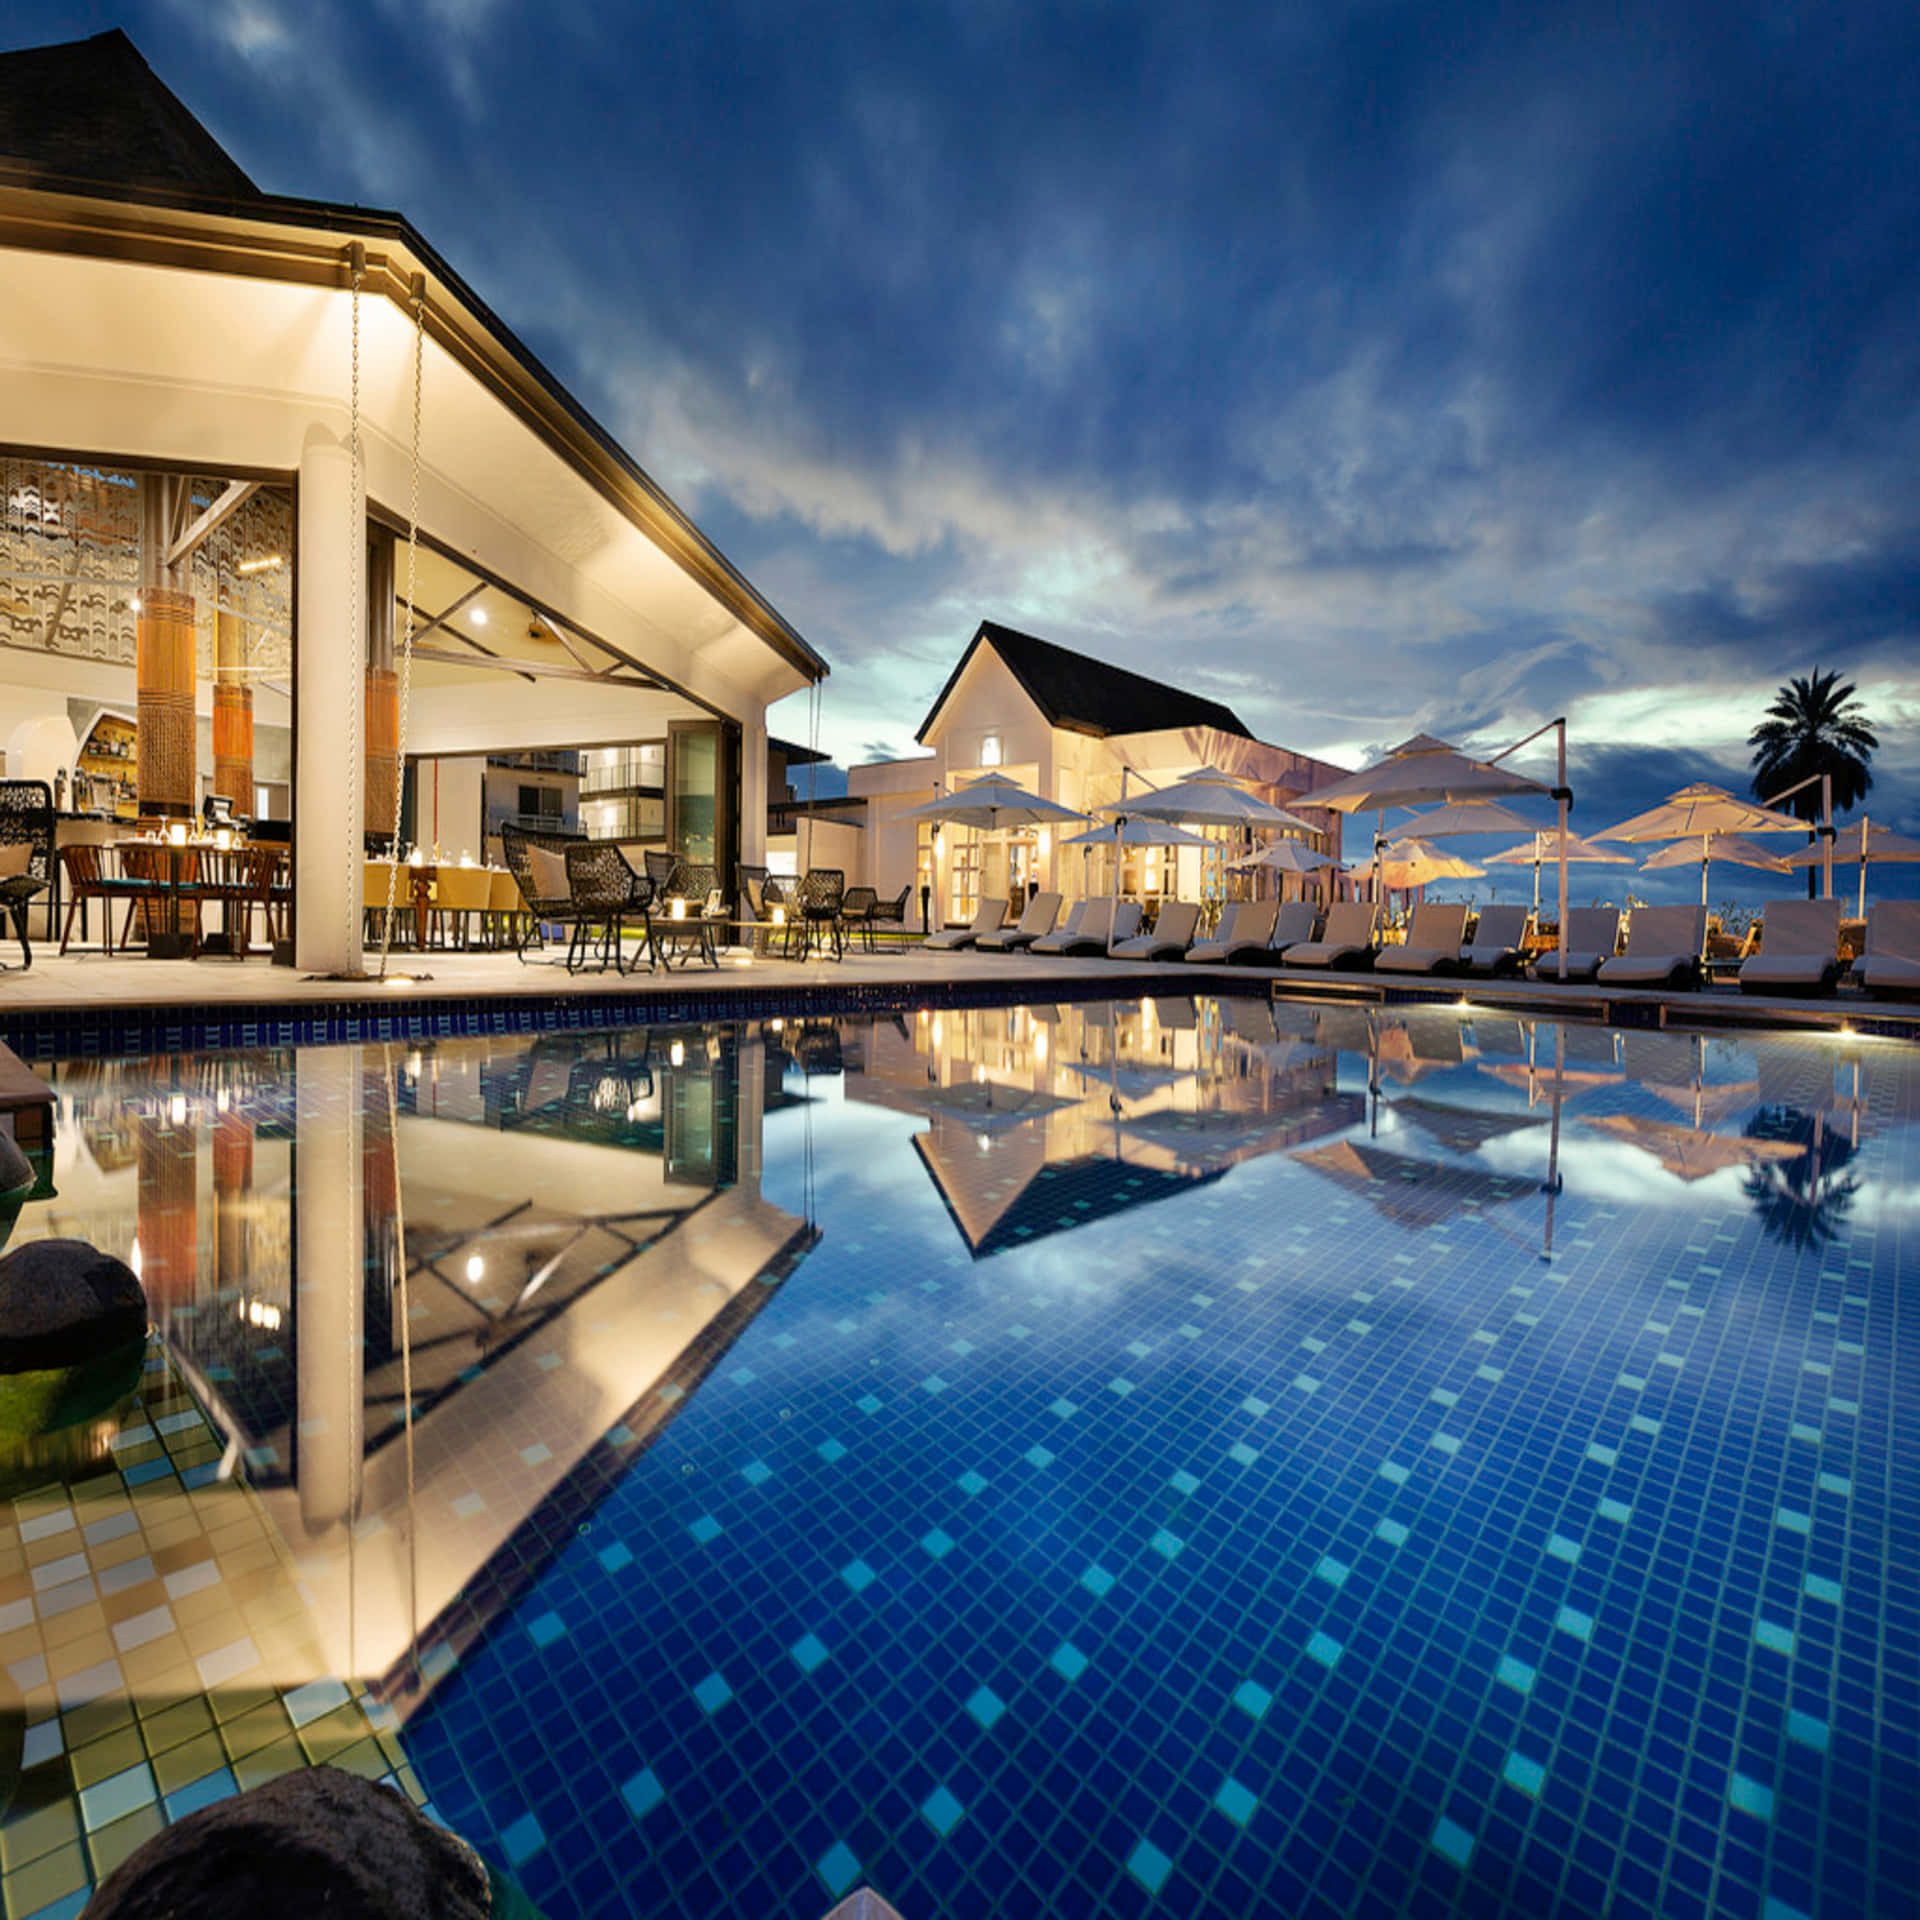 Luxurious Pool Resort Nighttime. Wallpaper